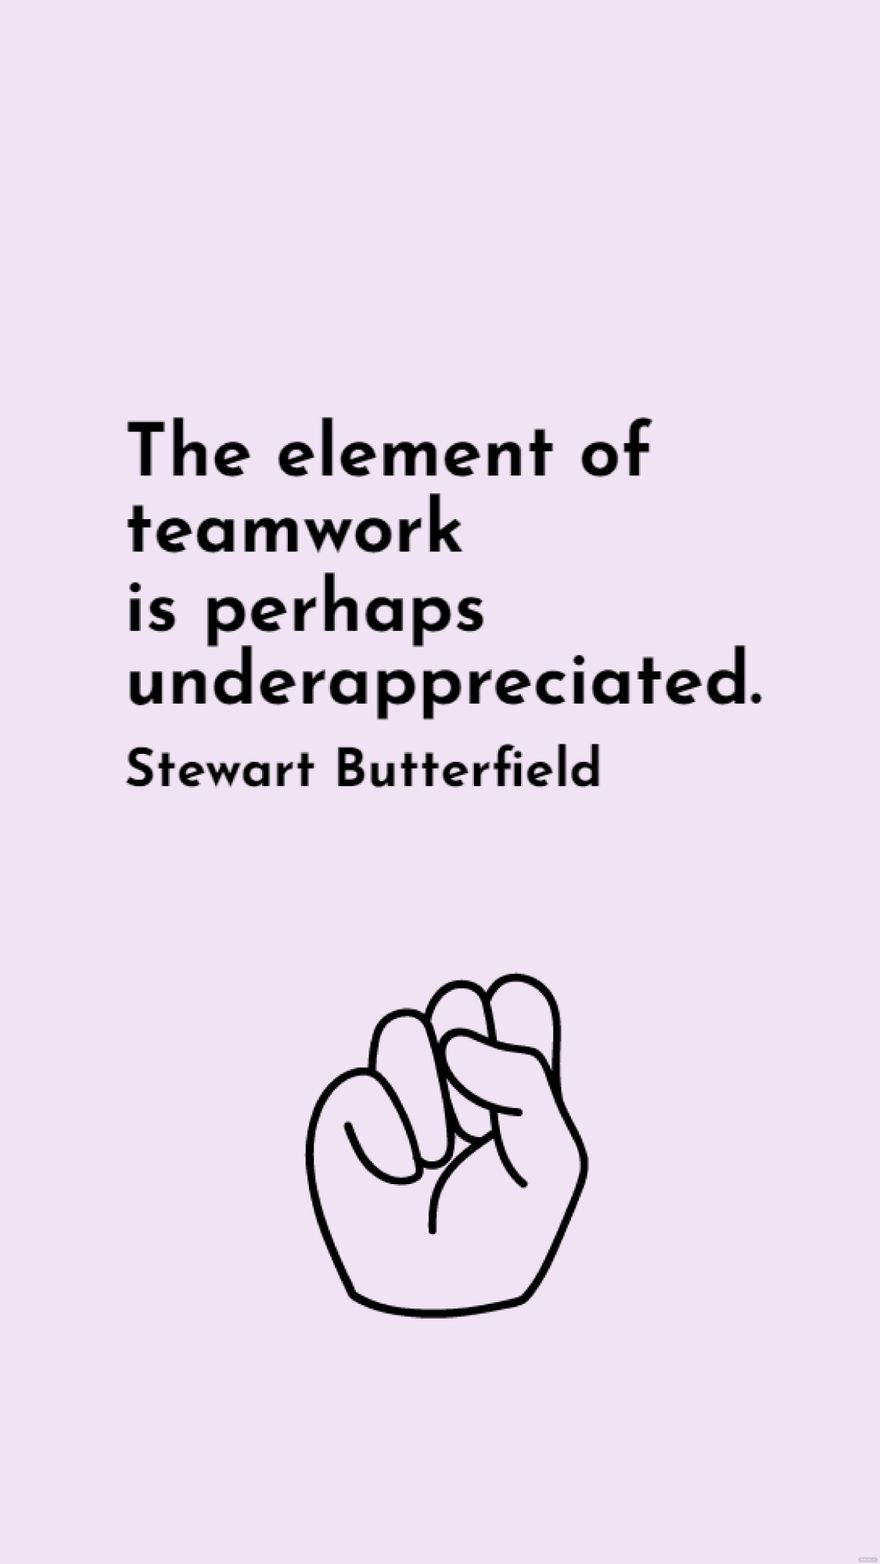 Free Stewart Butterfield - The element of teamwork is perhaps underappreciated.